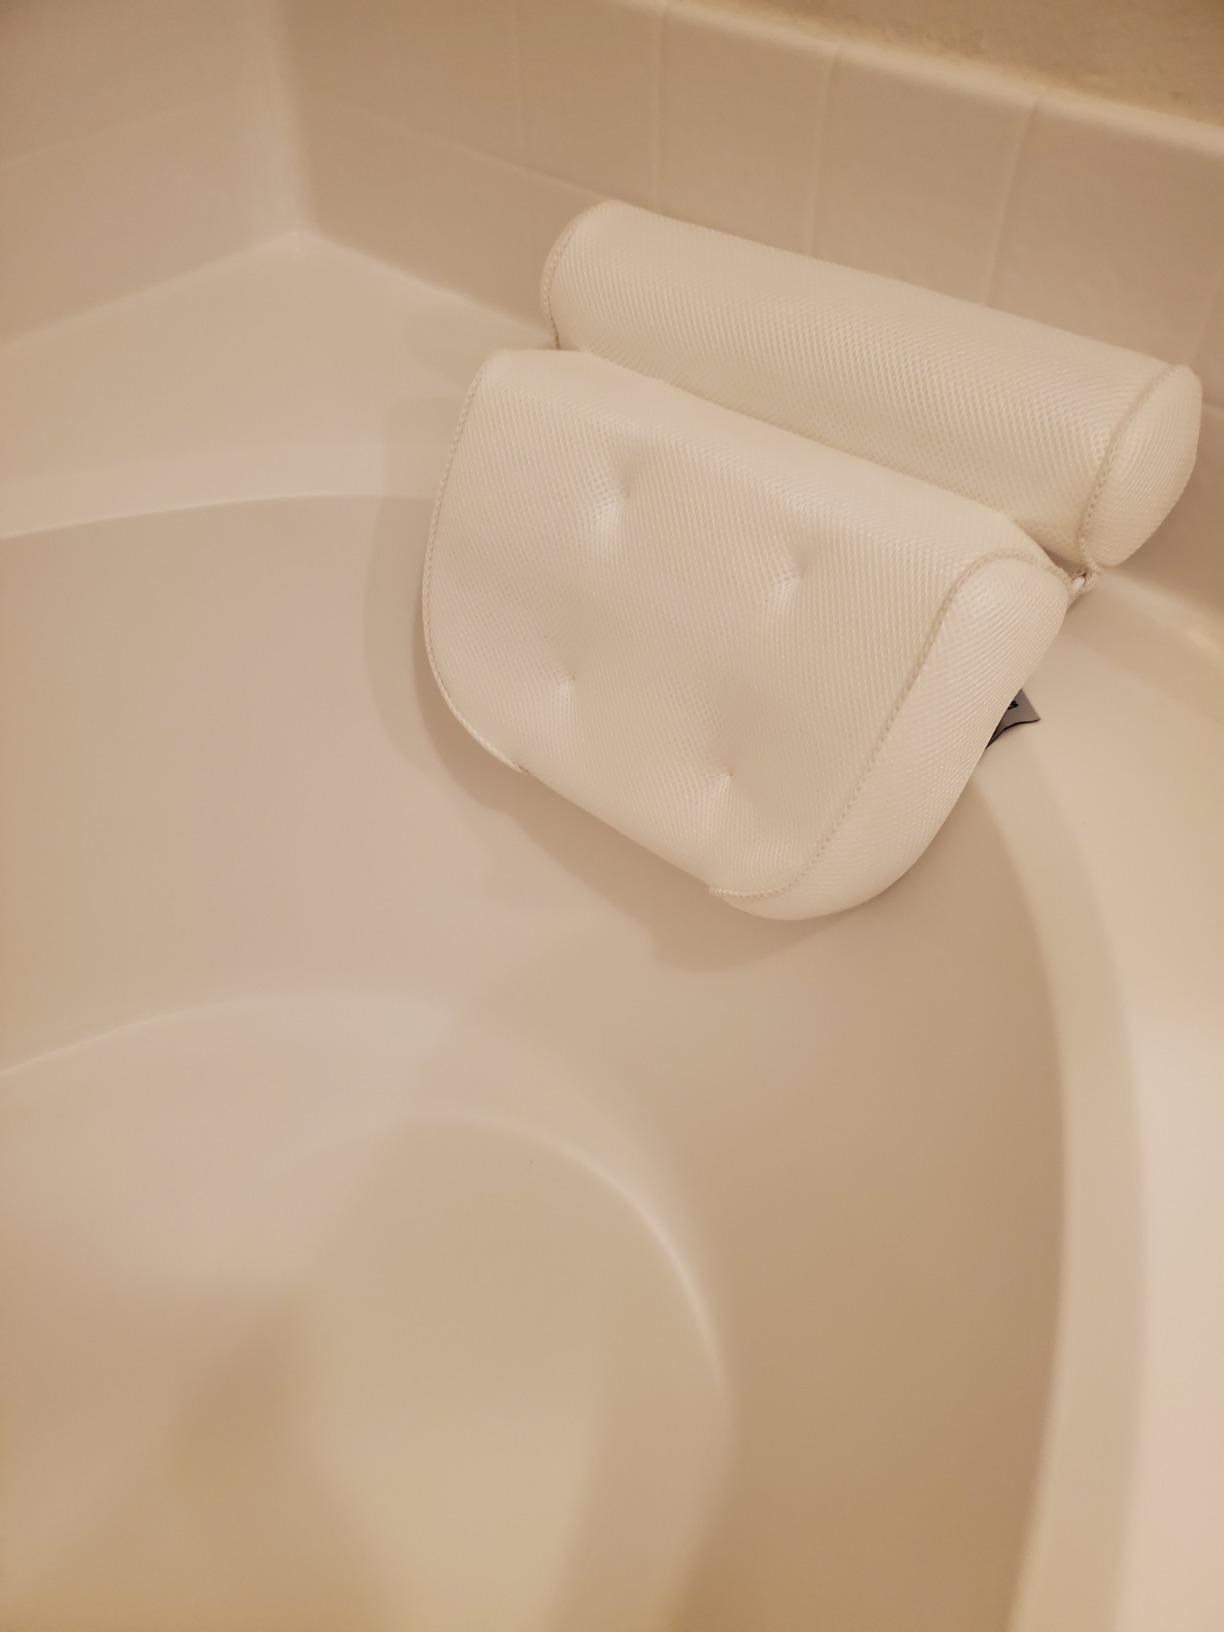 The pillow in a bathtub